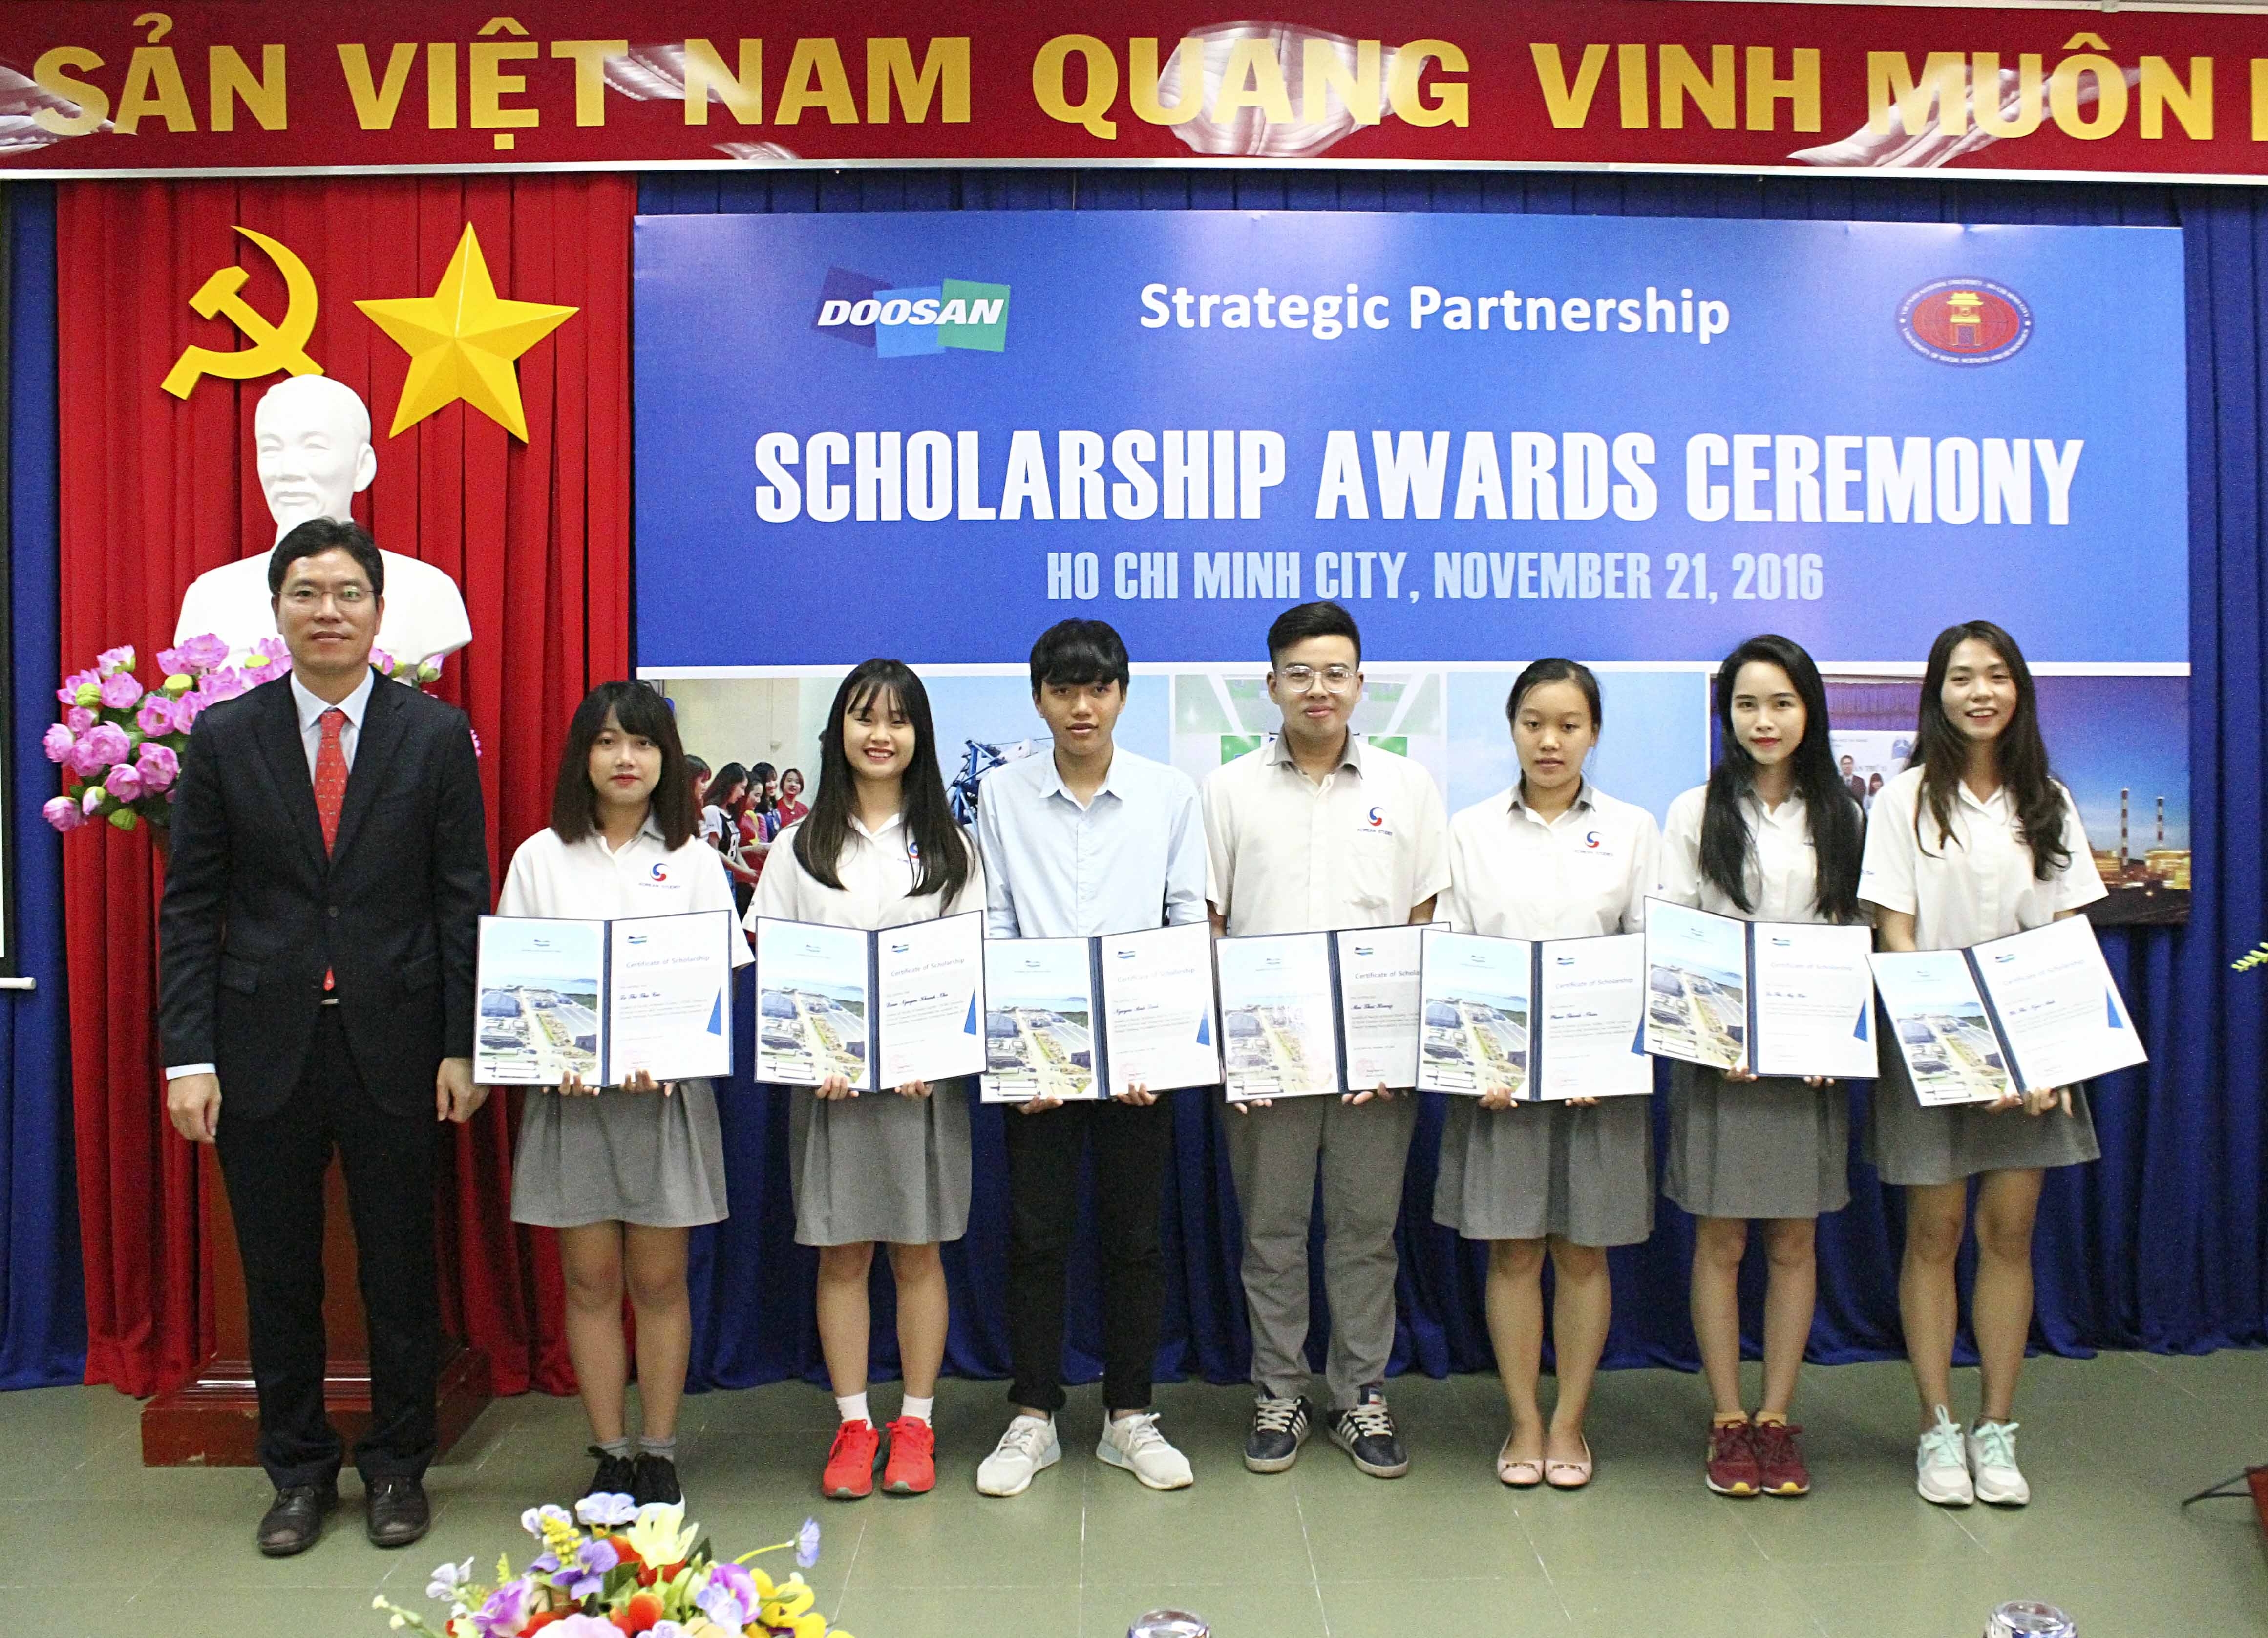 More than 1,000 Vietnamese students have received a Doosan Vina Scholarship